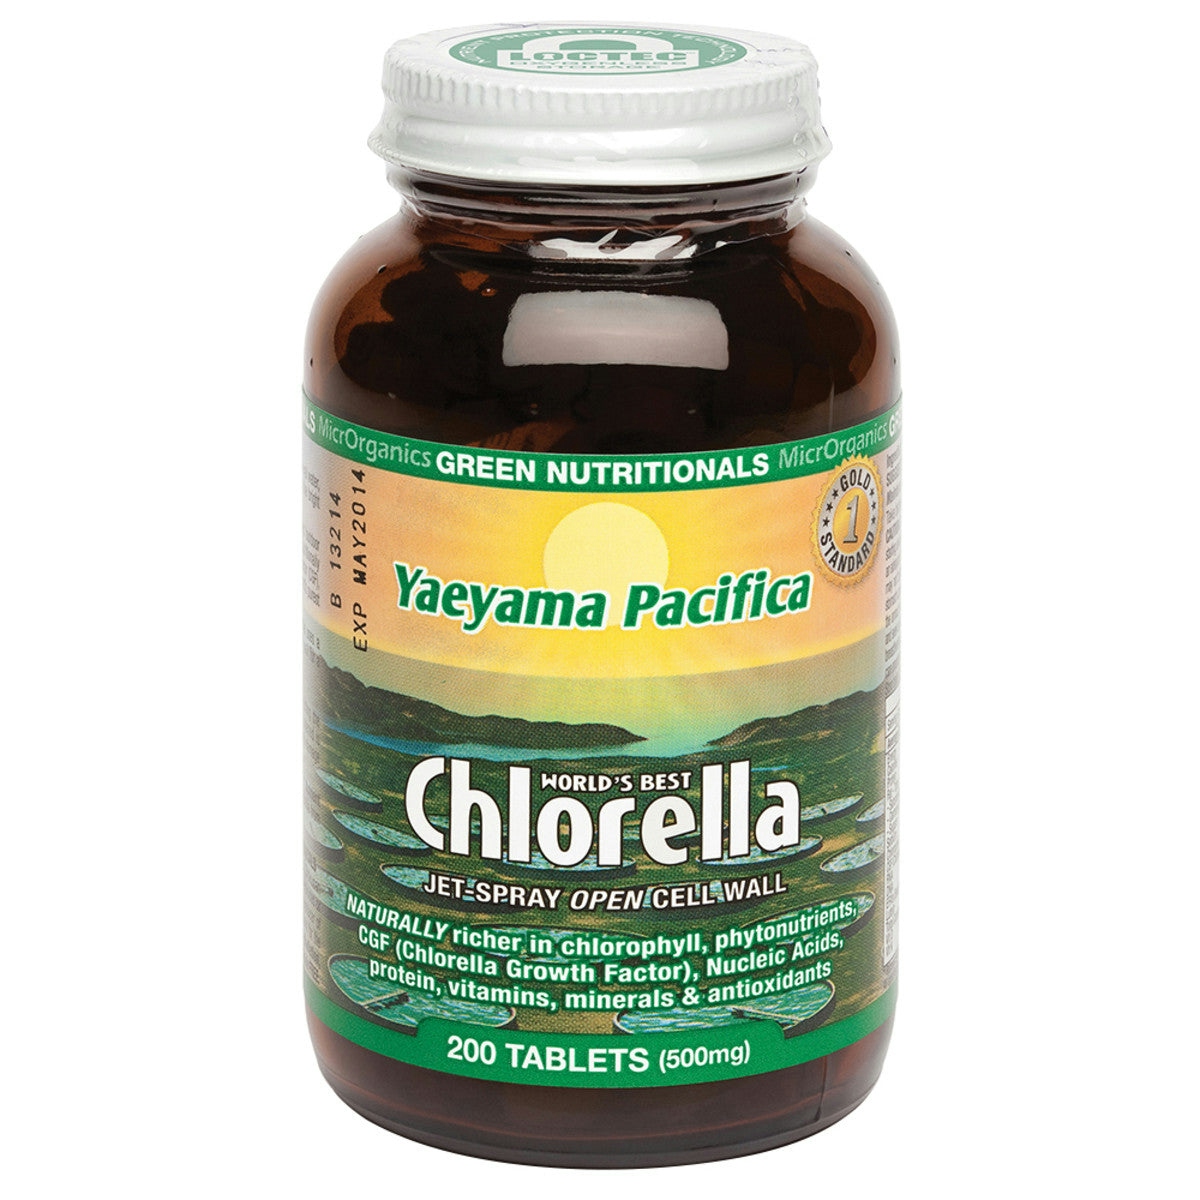 image of MicrOrganics Green Nutritionals Yaeyama Pacifica Chlorella 200t on white background 